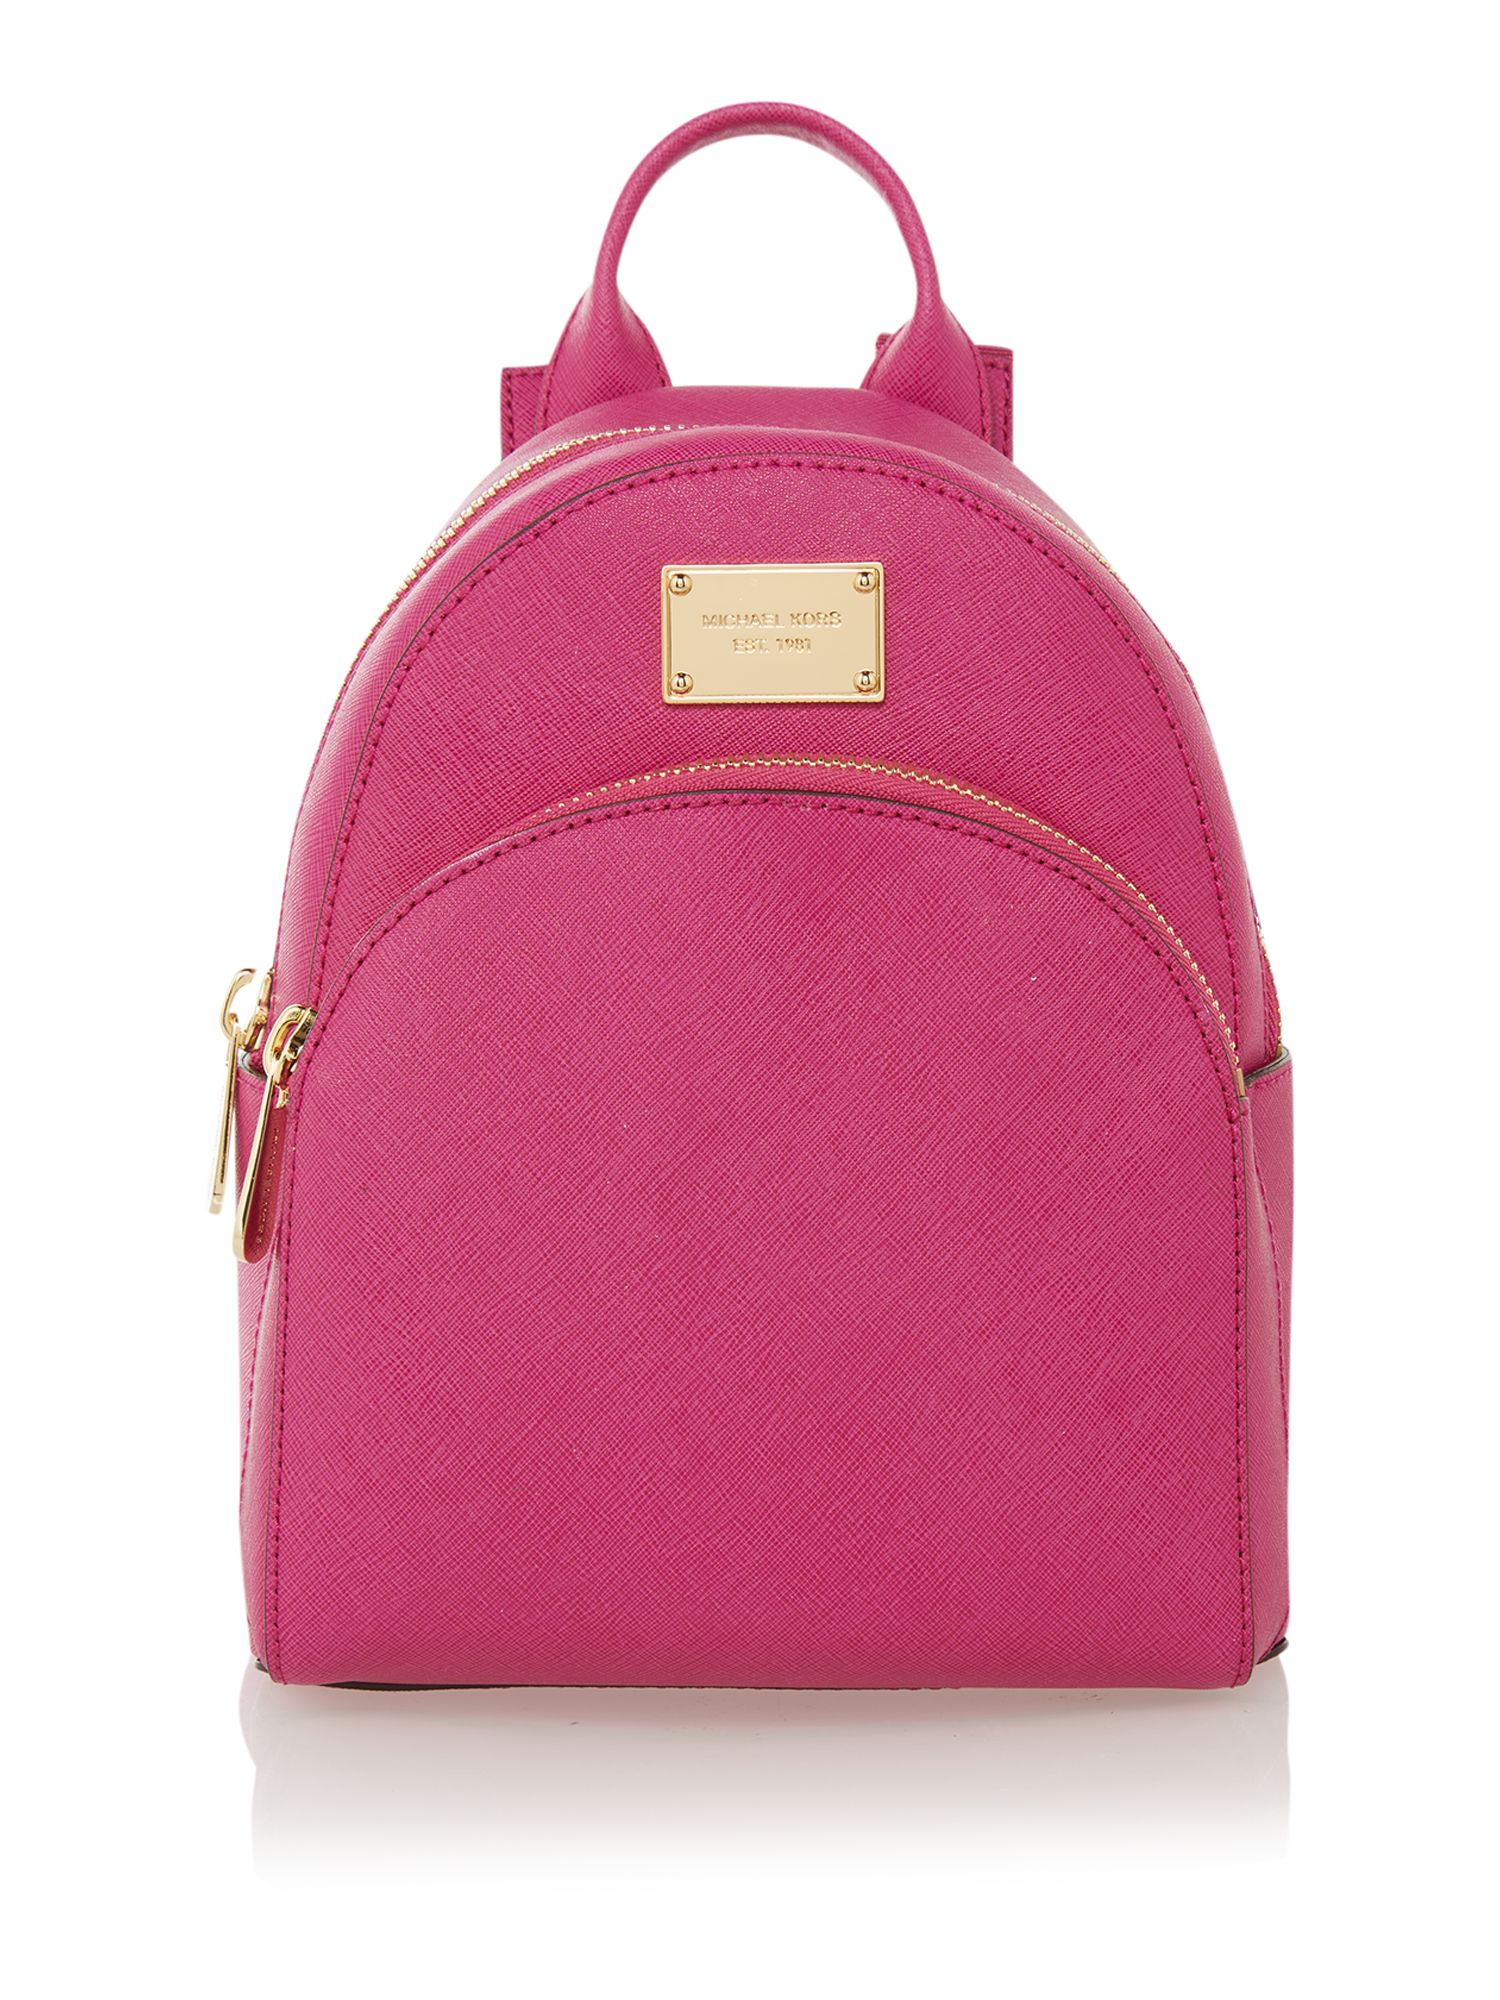 Lyst - Michael Kors Jet Set Item Pink Mini Backpack in Pink